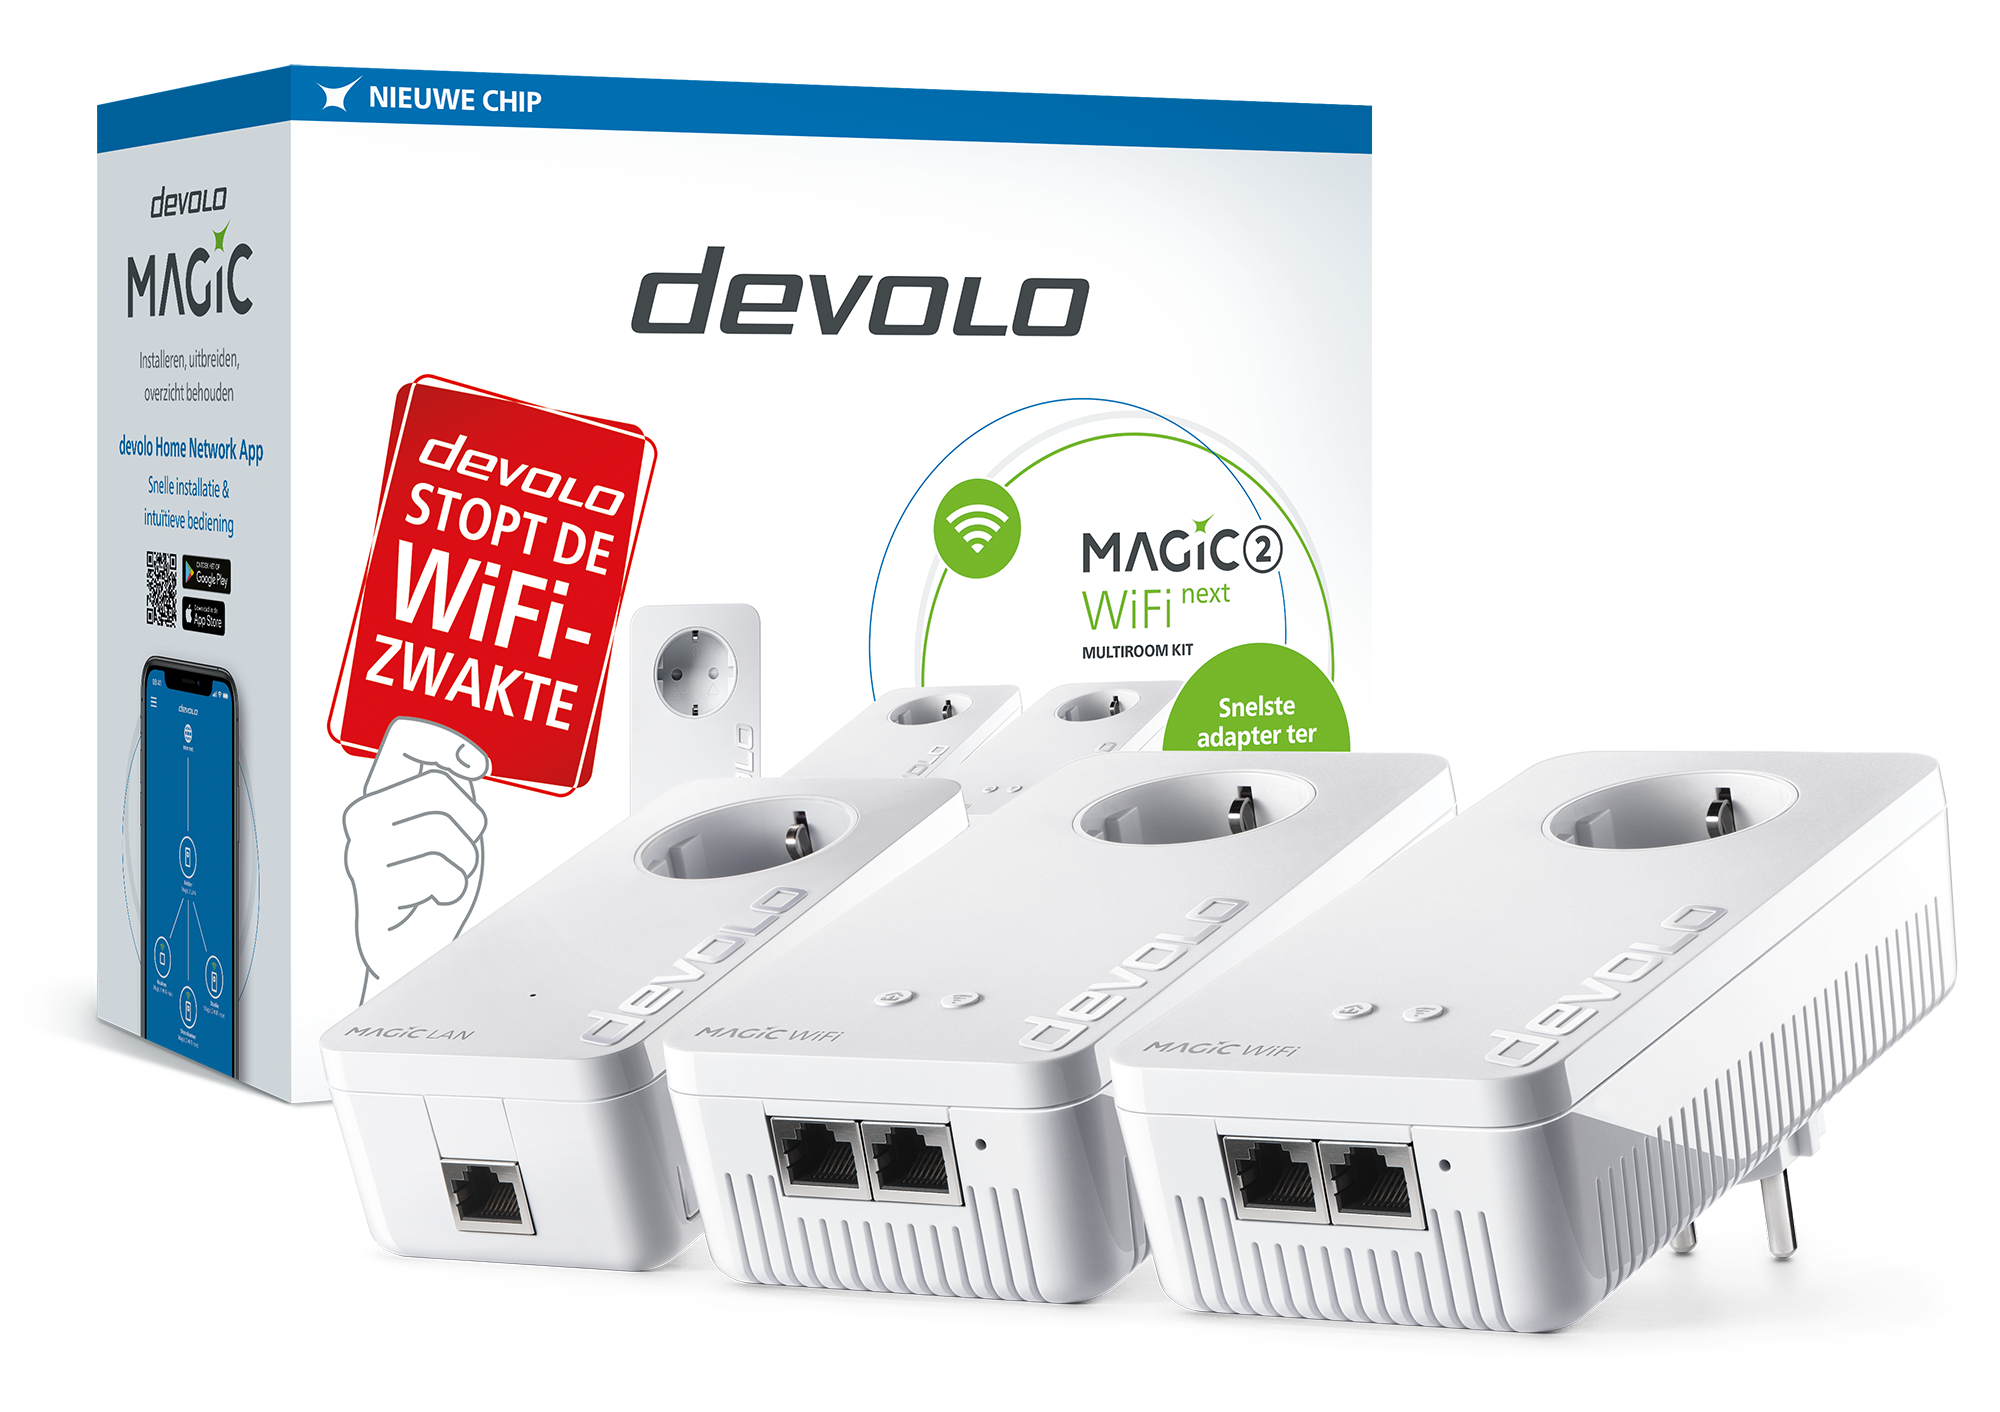 devolo Magic 2 WiFi Next Multiroom (NL)